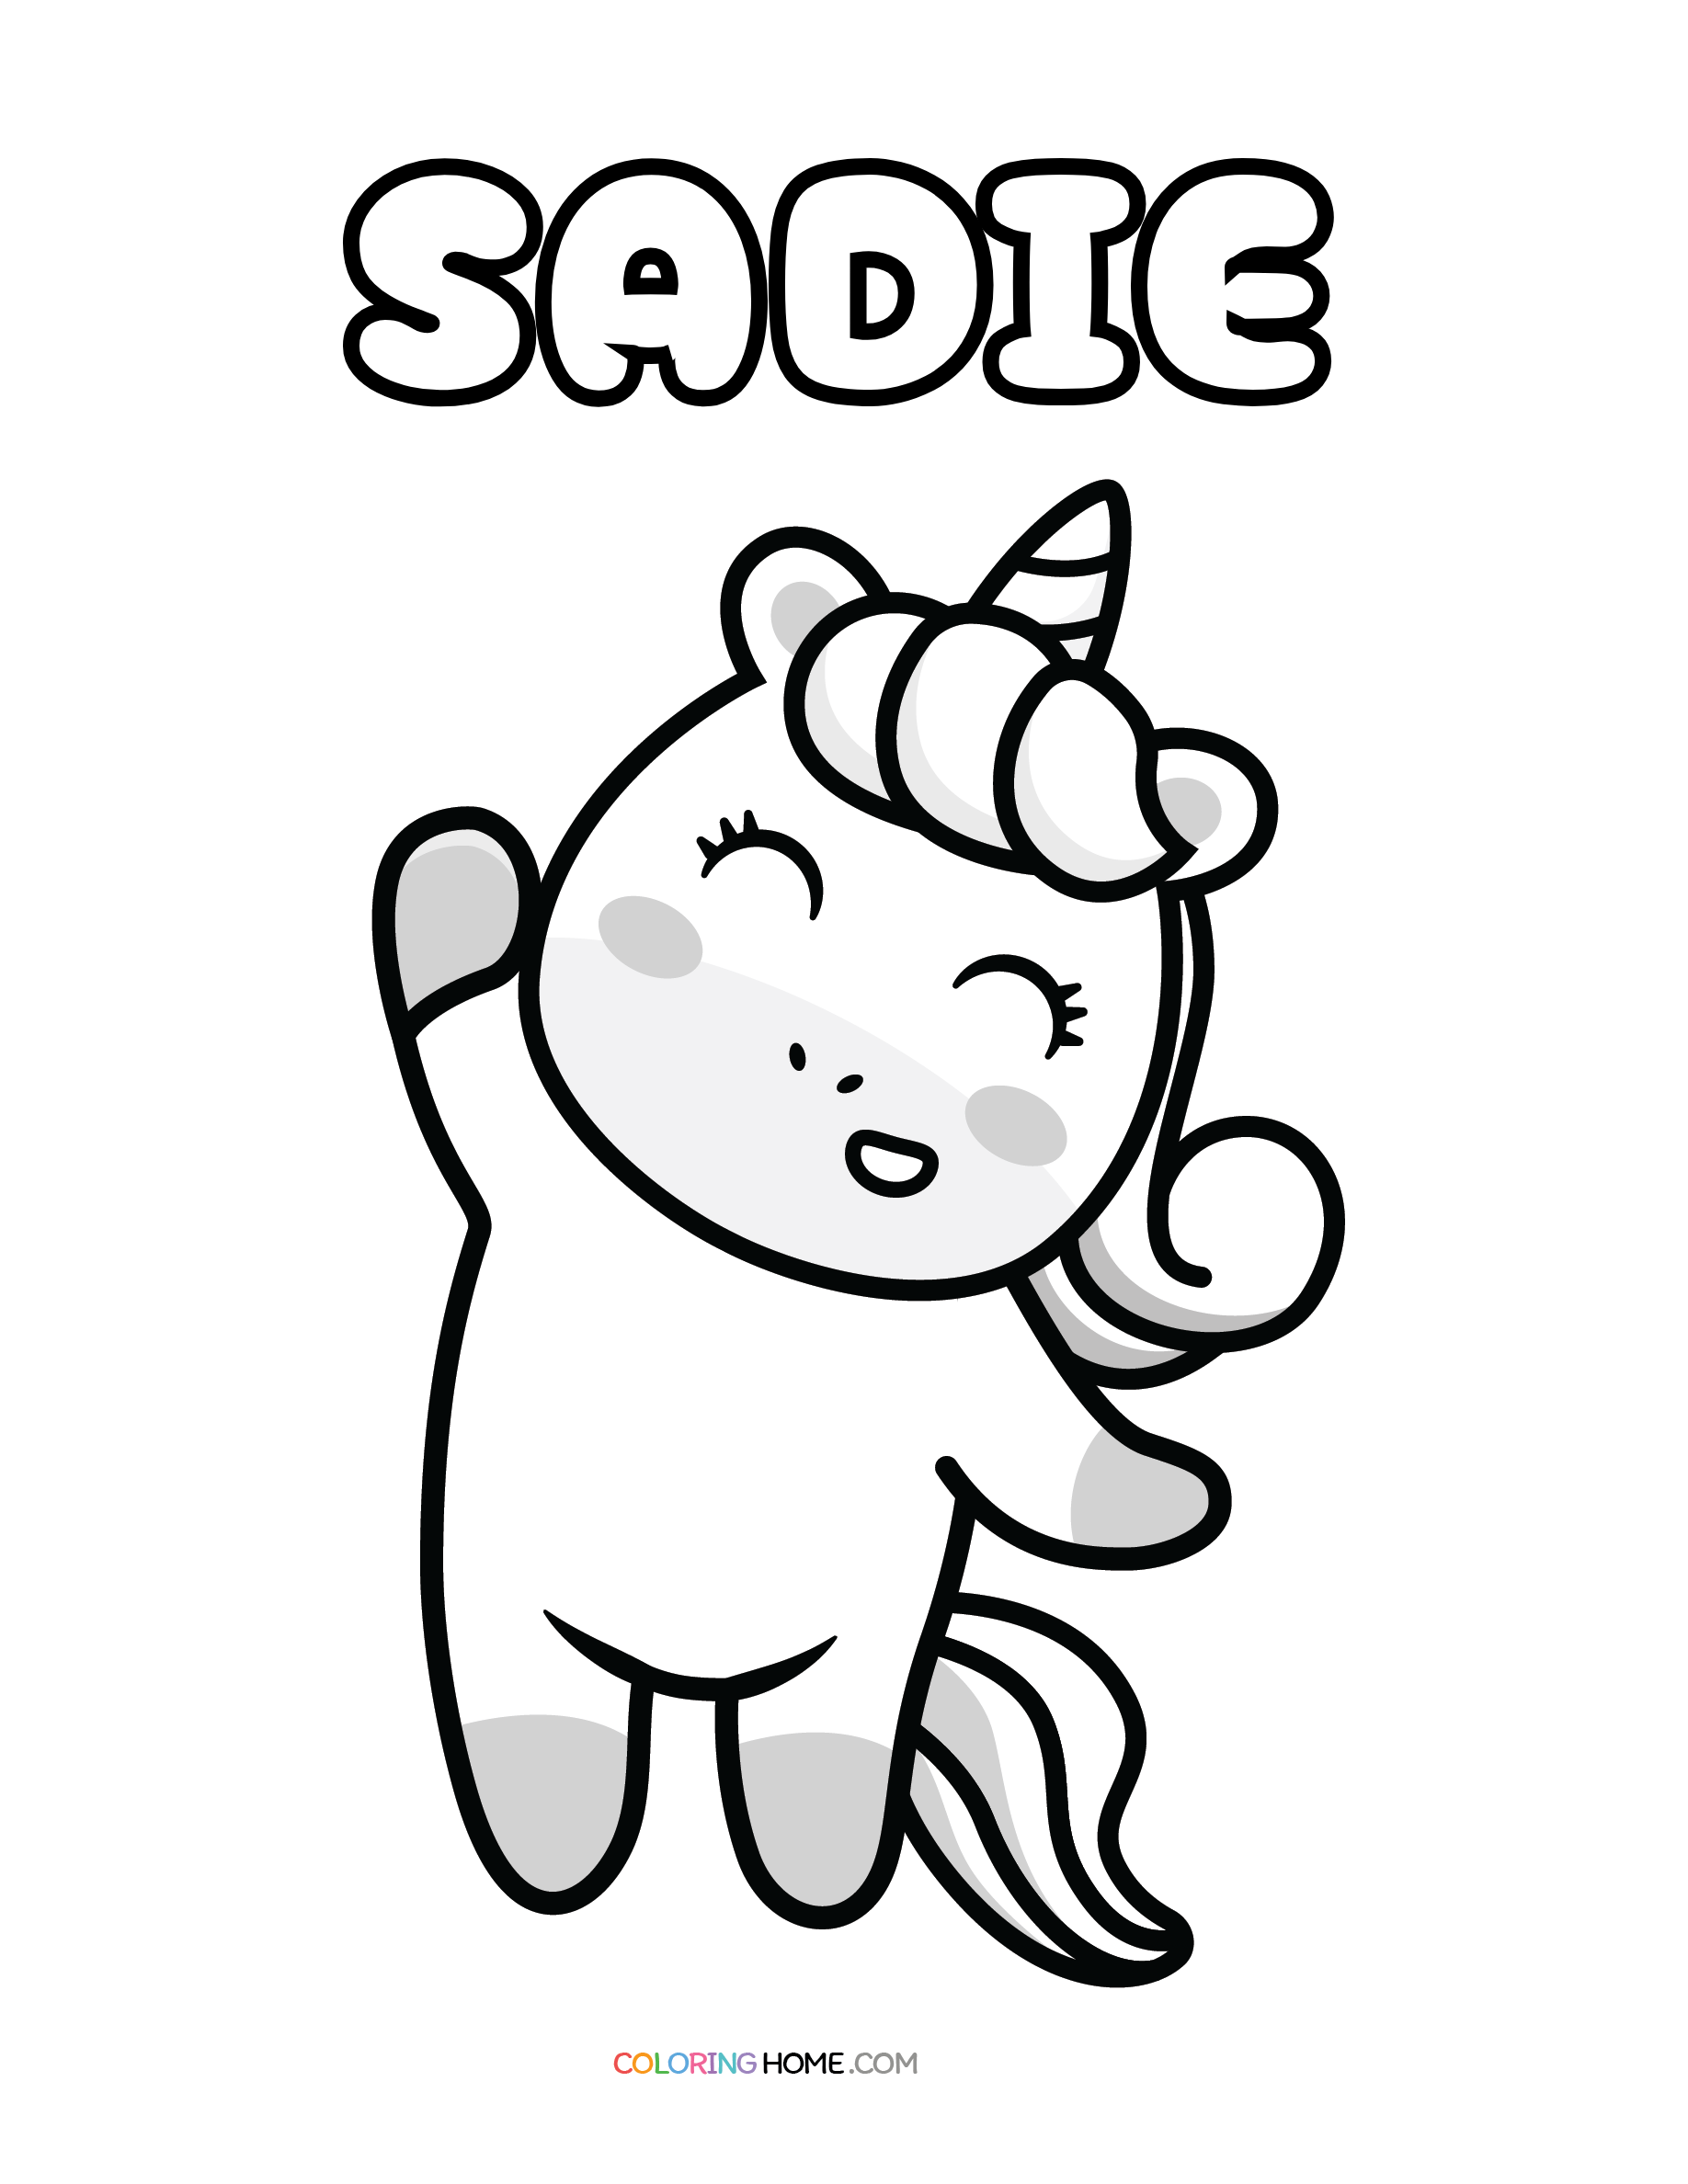 Sadie unicorn coloring page